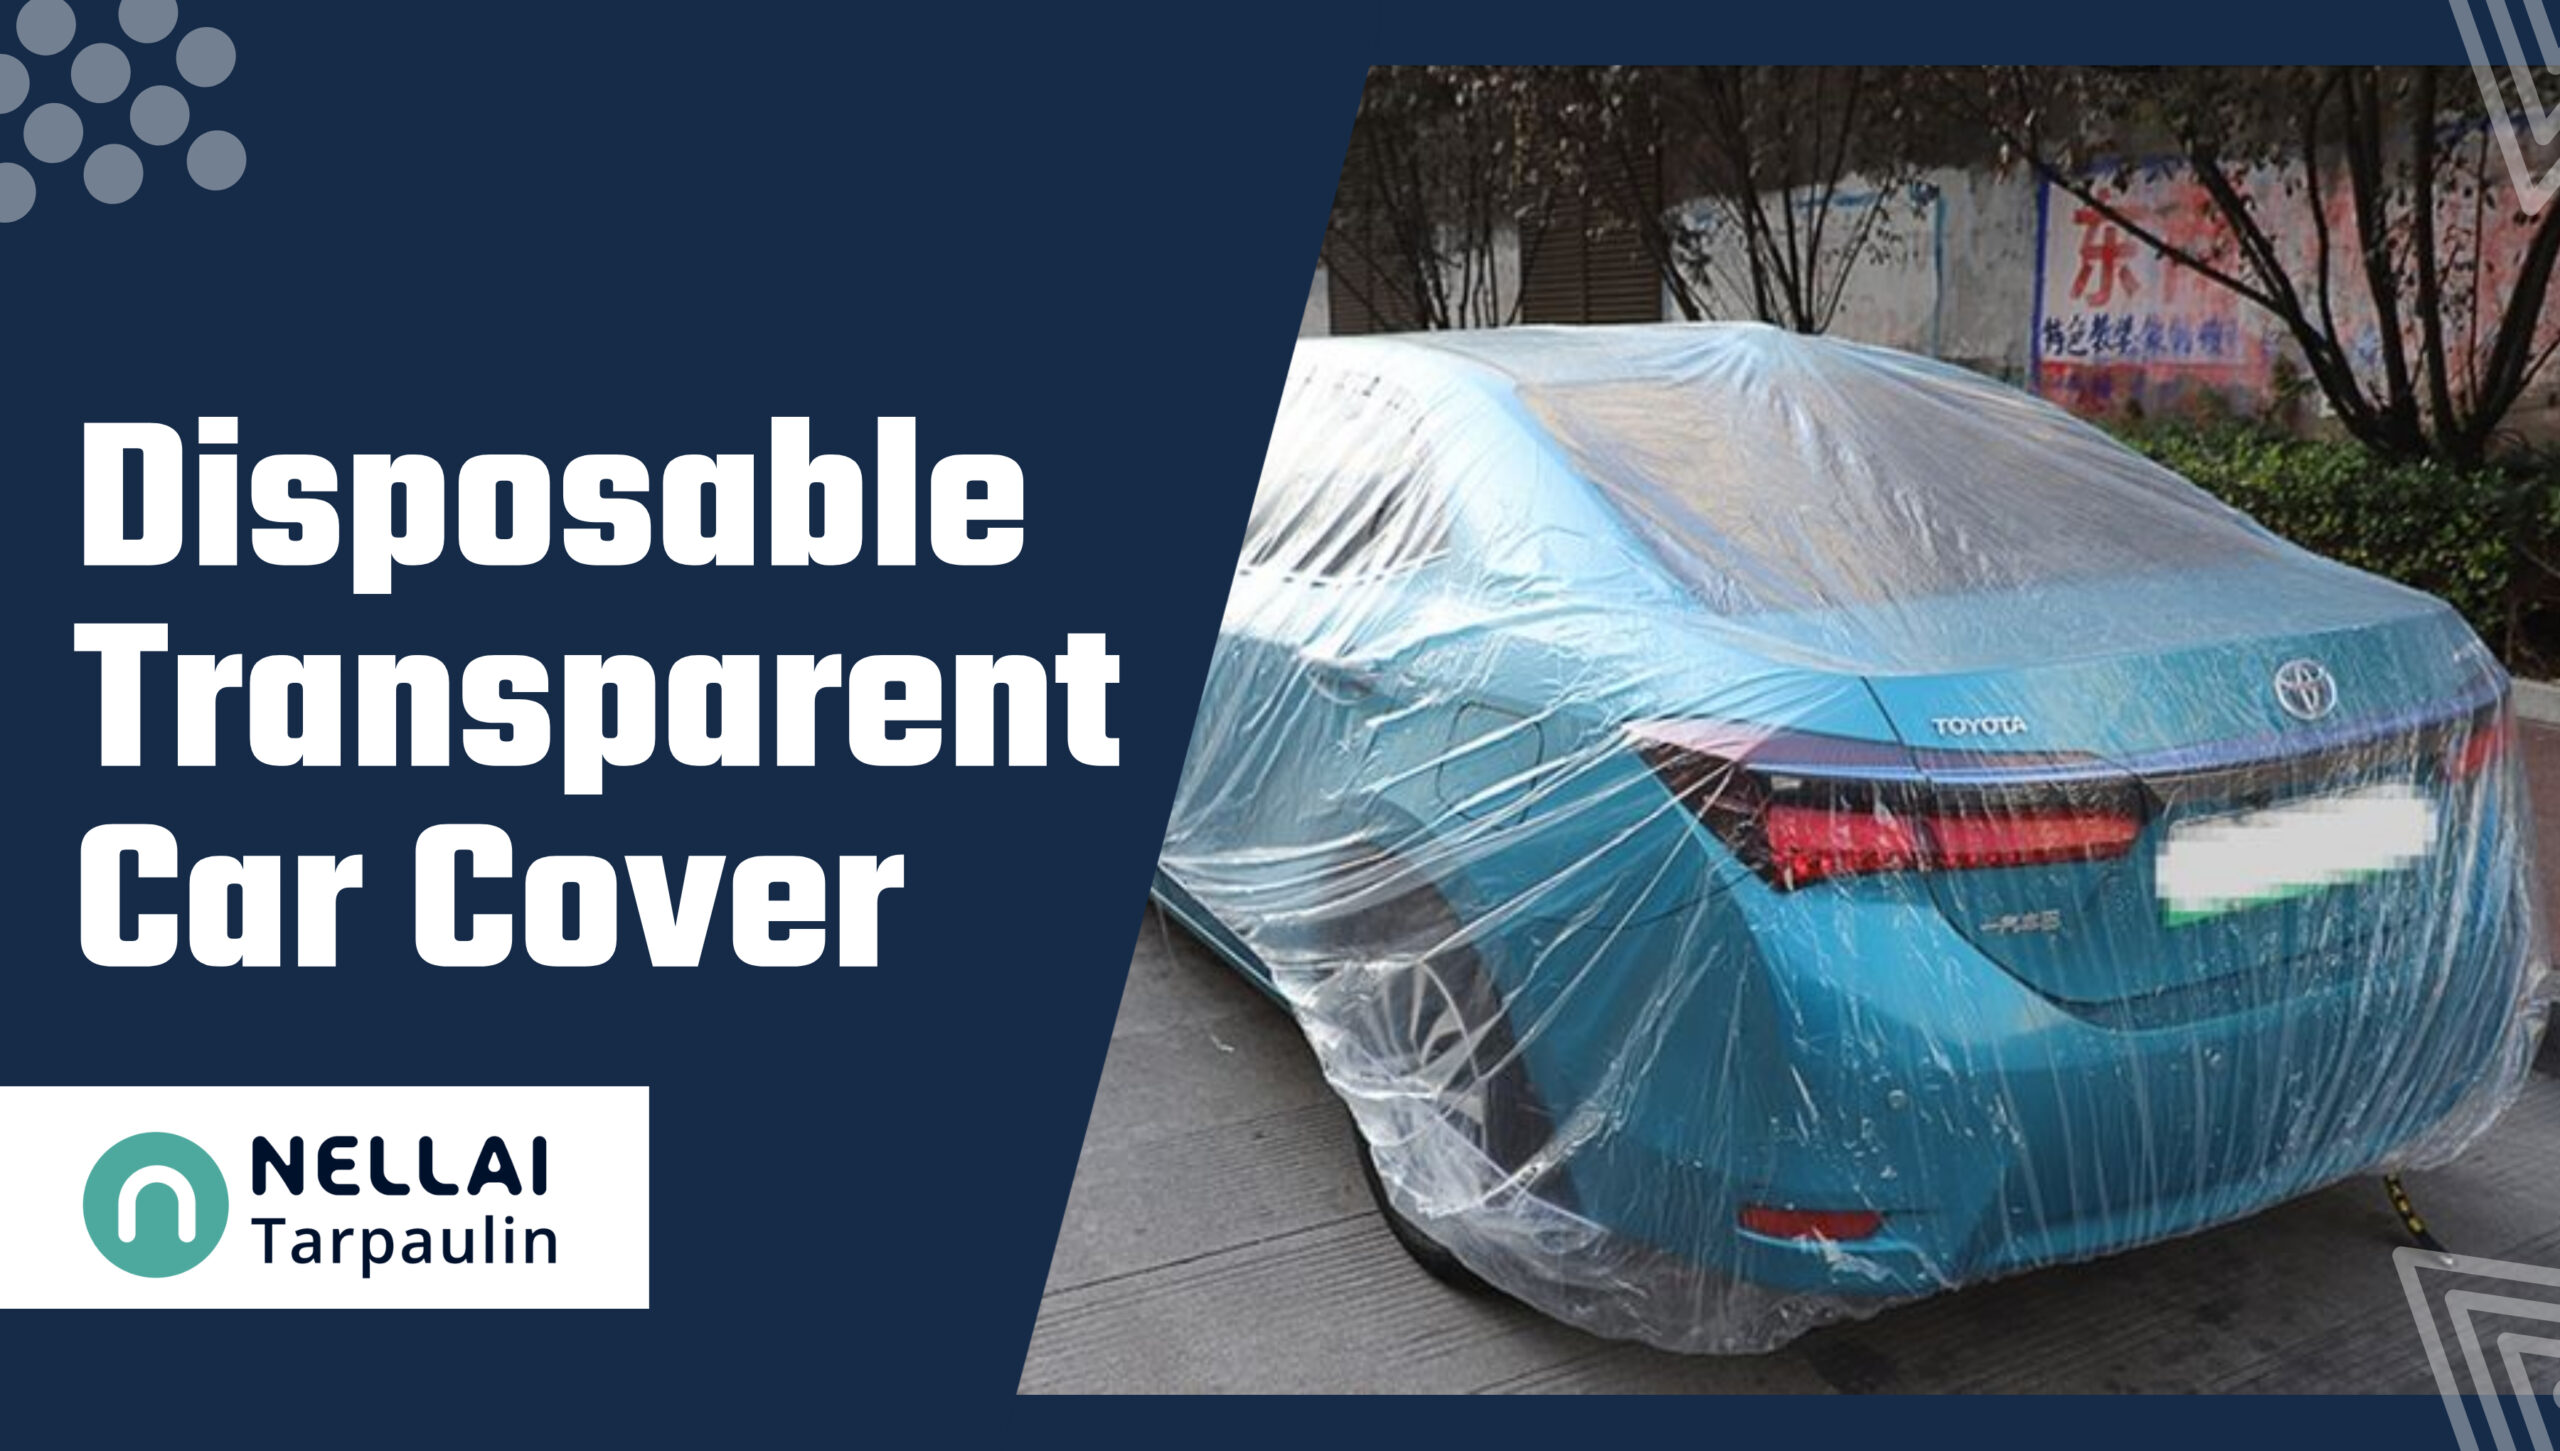 Disposable Transparent Car Cover